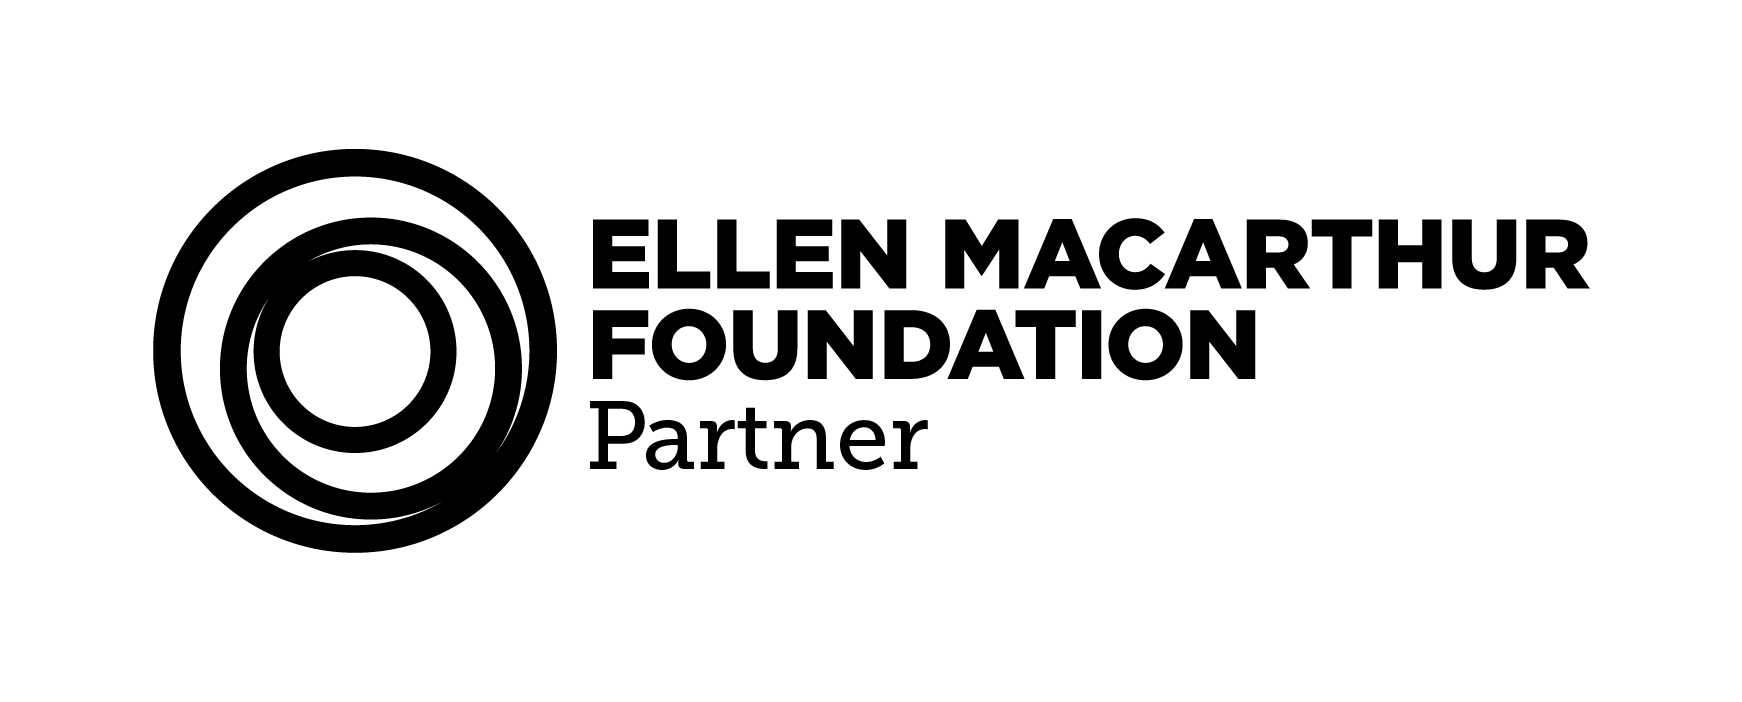 EMF_Network_Partner_logo_Black